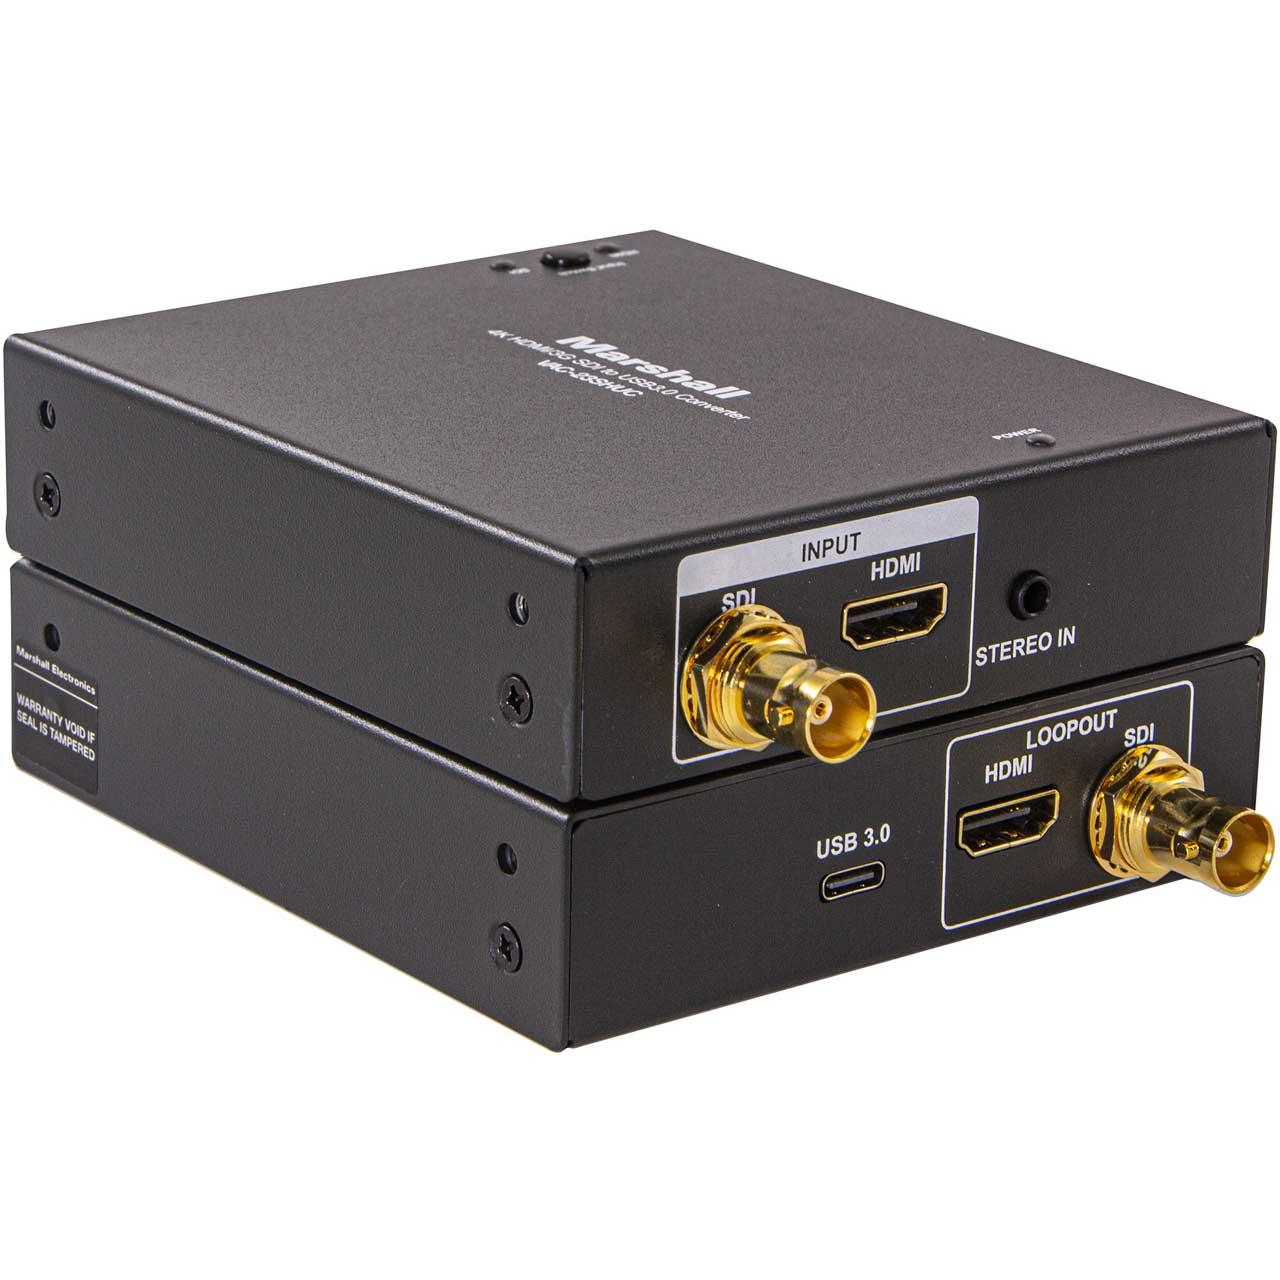 Reduktion landdistrikterne ske Marshall VAC-23SHUC 4K HDMI/3G-SDI to USB 3.0 Converter - Encoder - Capture  Device